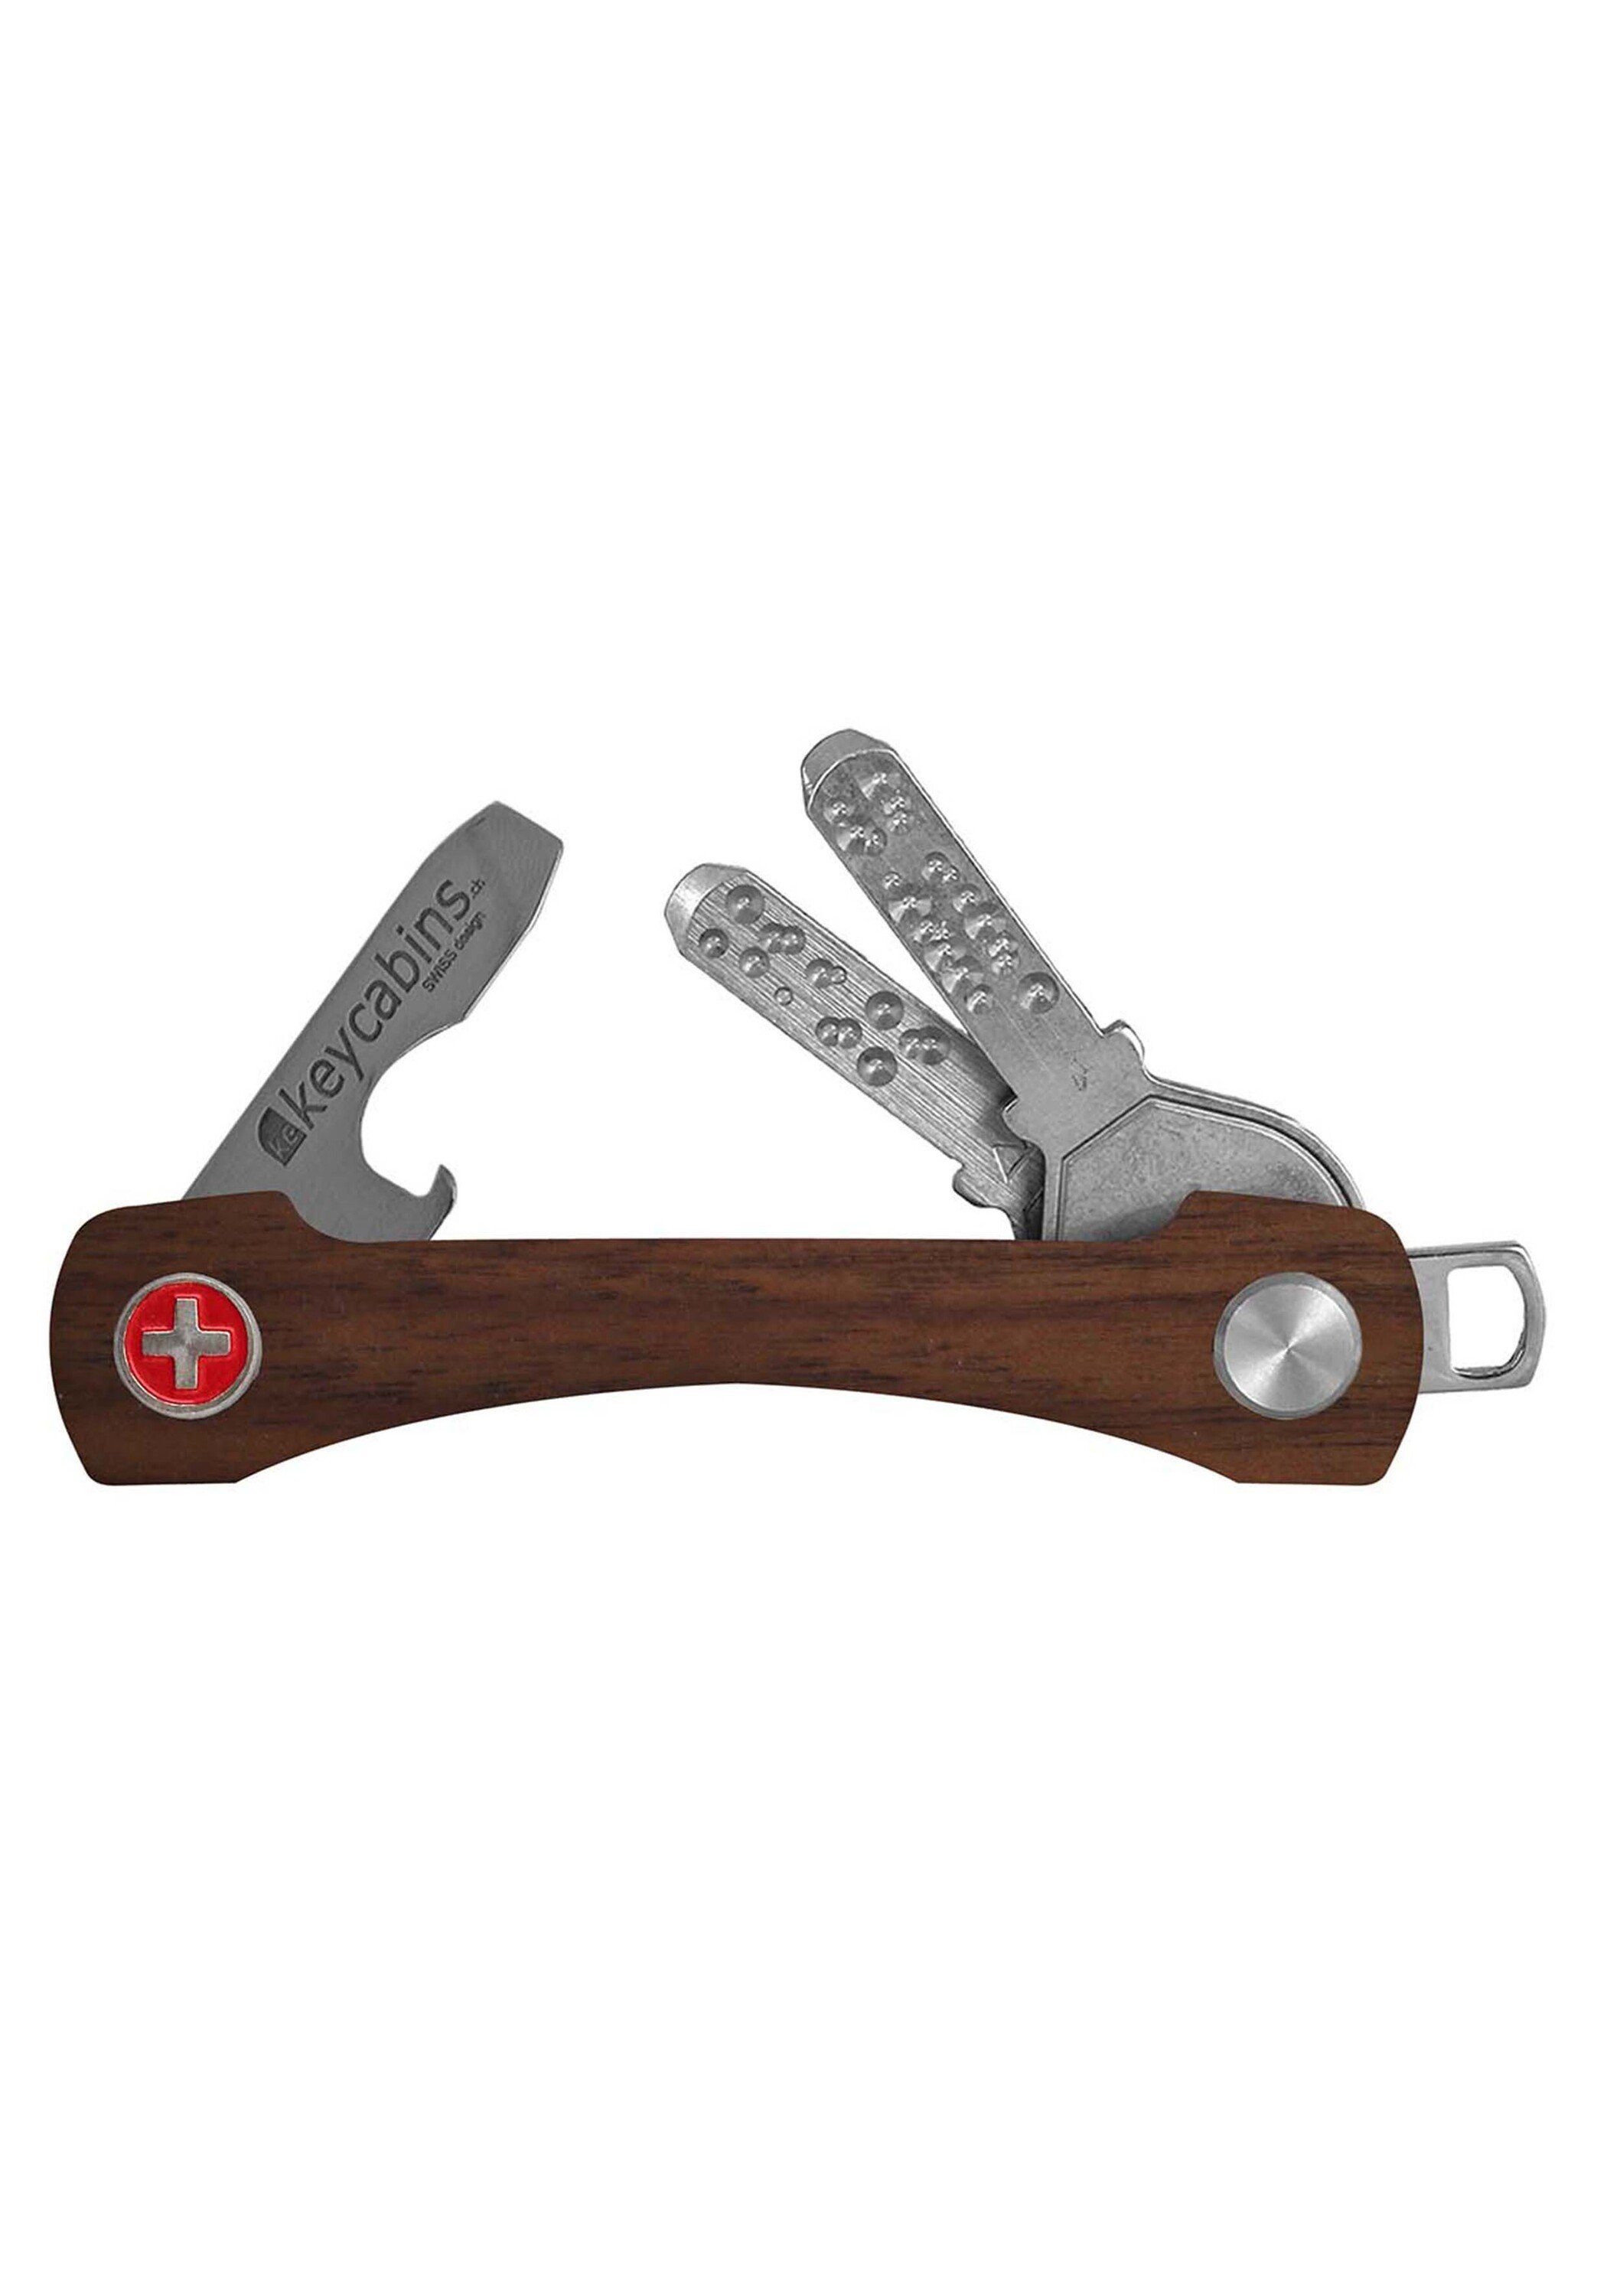 S2, Schlüsselanhänger keycabins made Wood SWISS braun